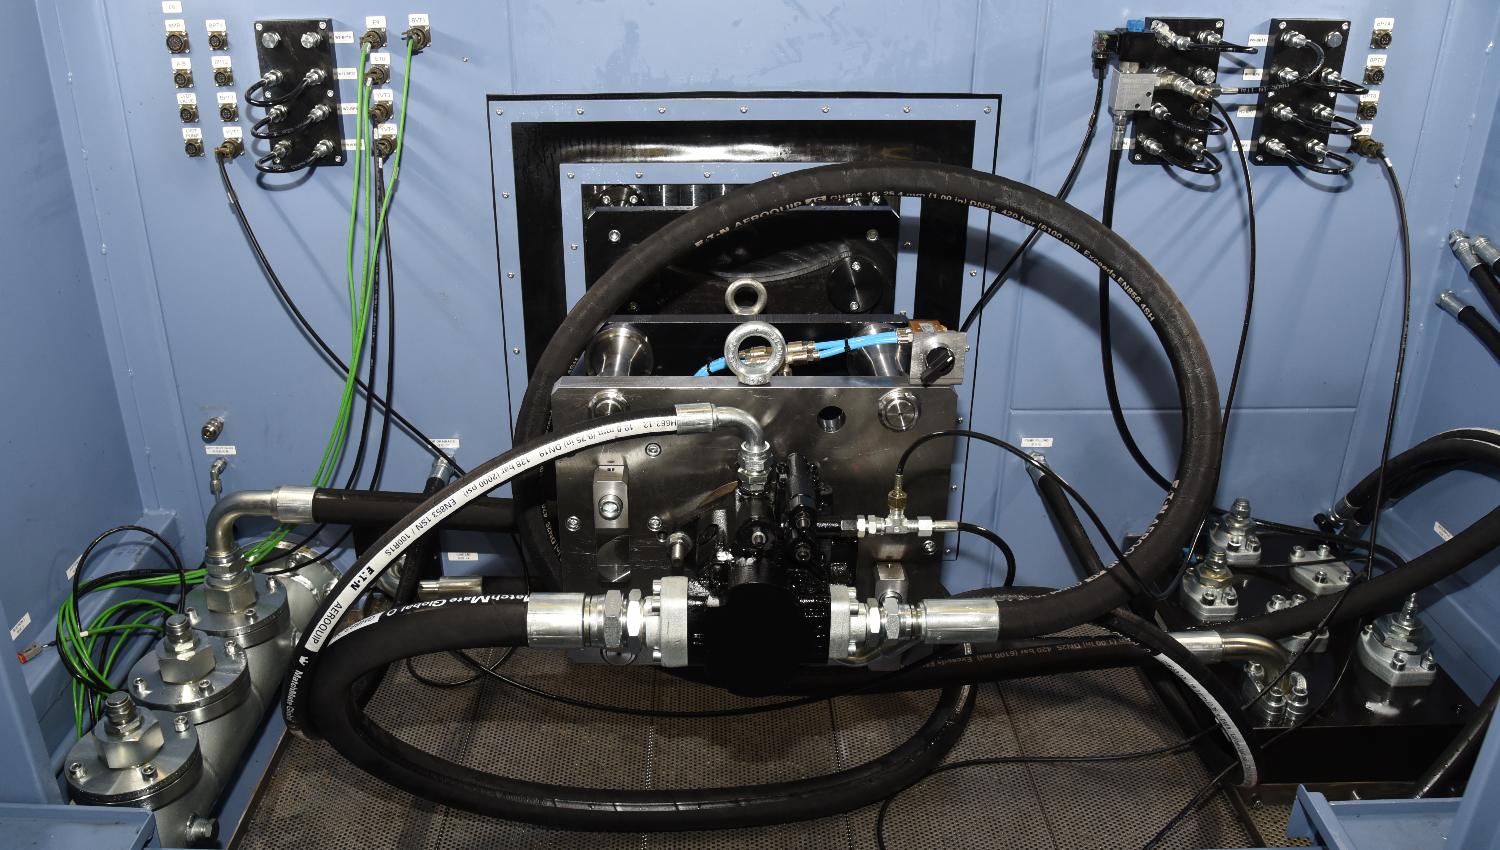 gear-motor-pumps-laboratory-test-bench-1084-2